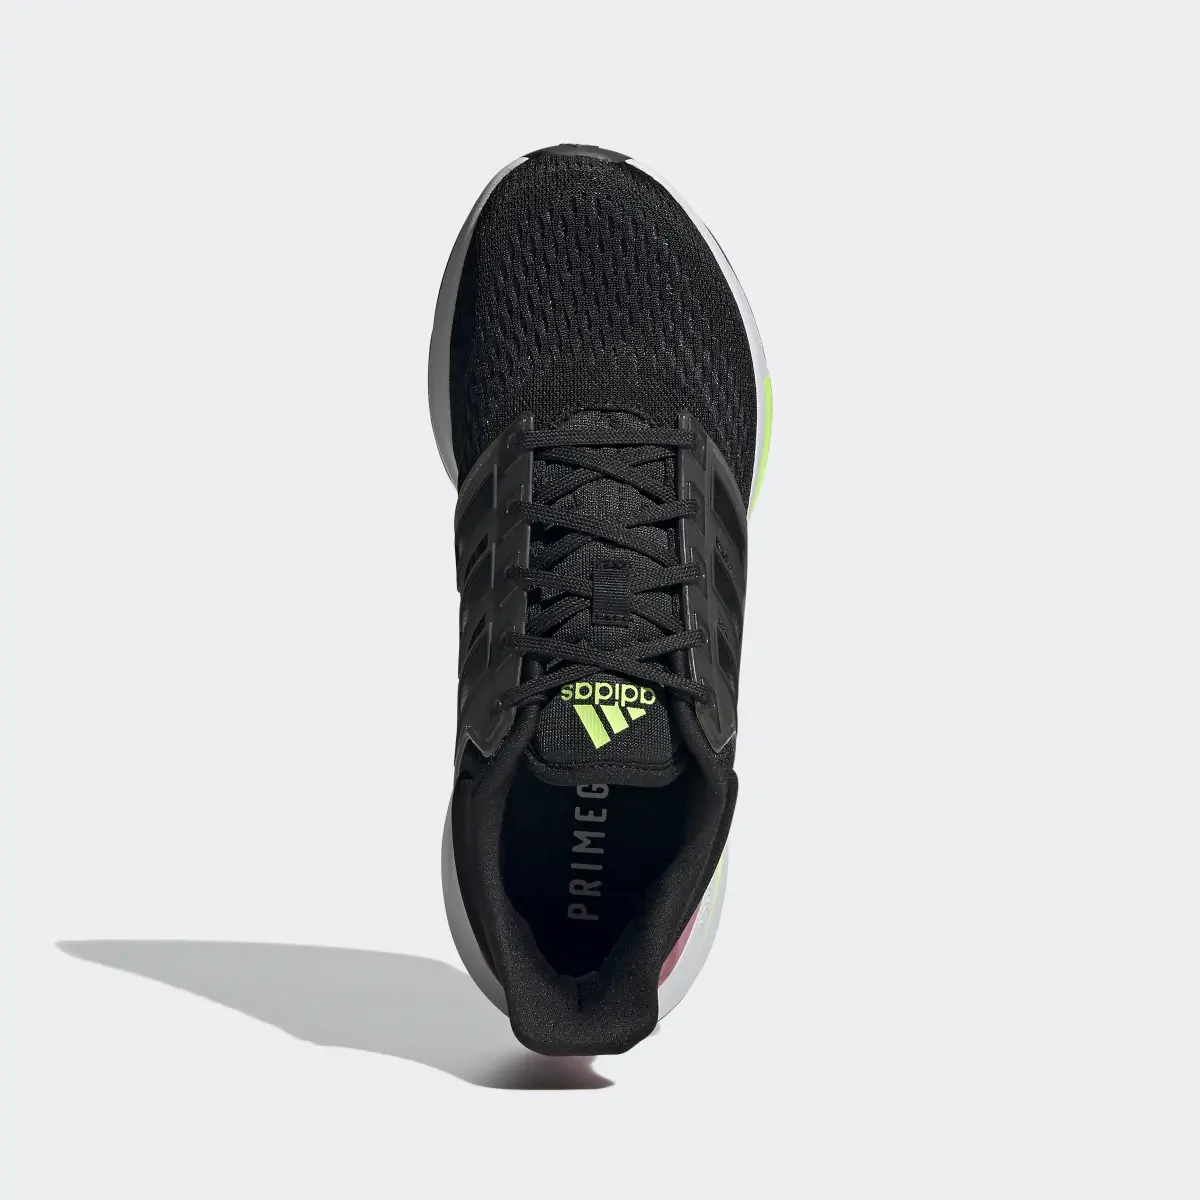 Adidas EQ21 Run Shoes. 3